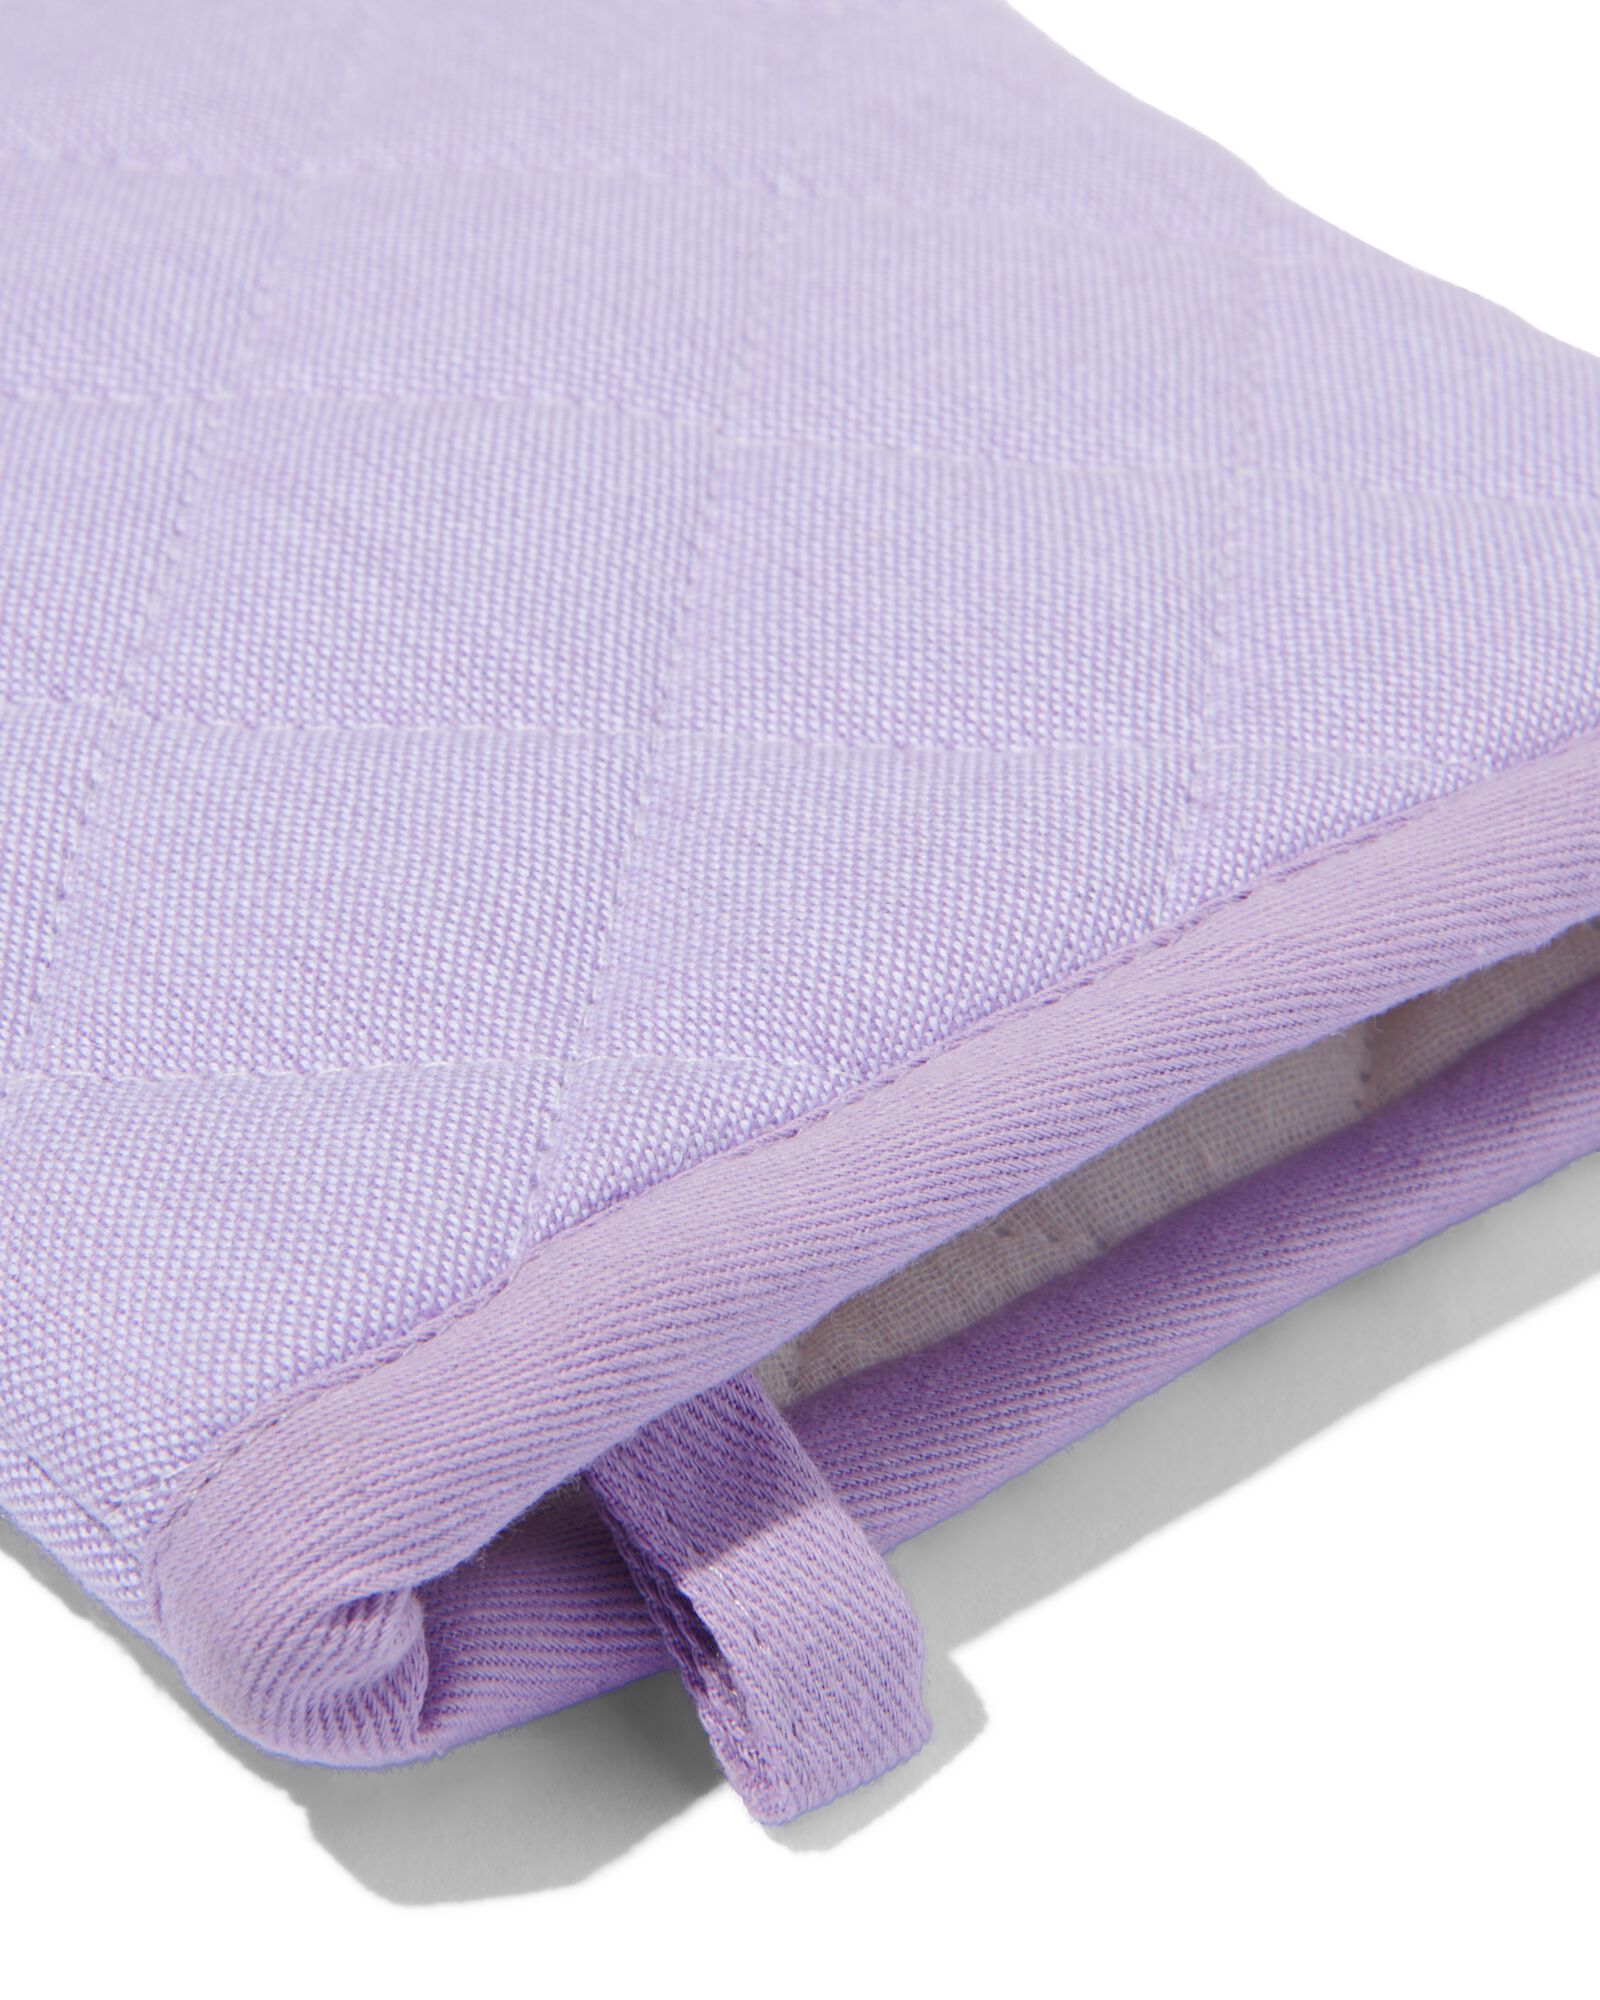 Topfhandschuh, 32 x 20 cm, Baumwoll-Chambray, violett - 5400170 - HEMA